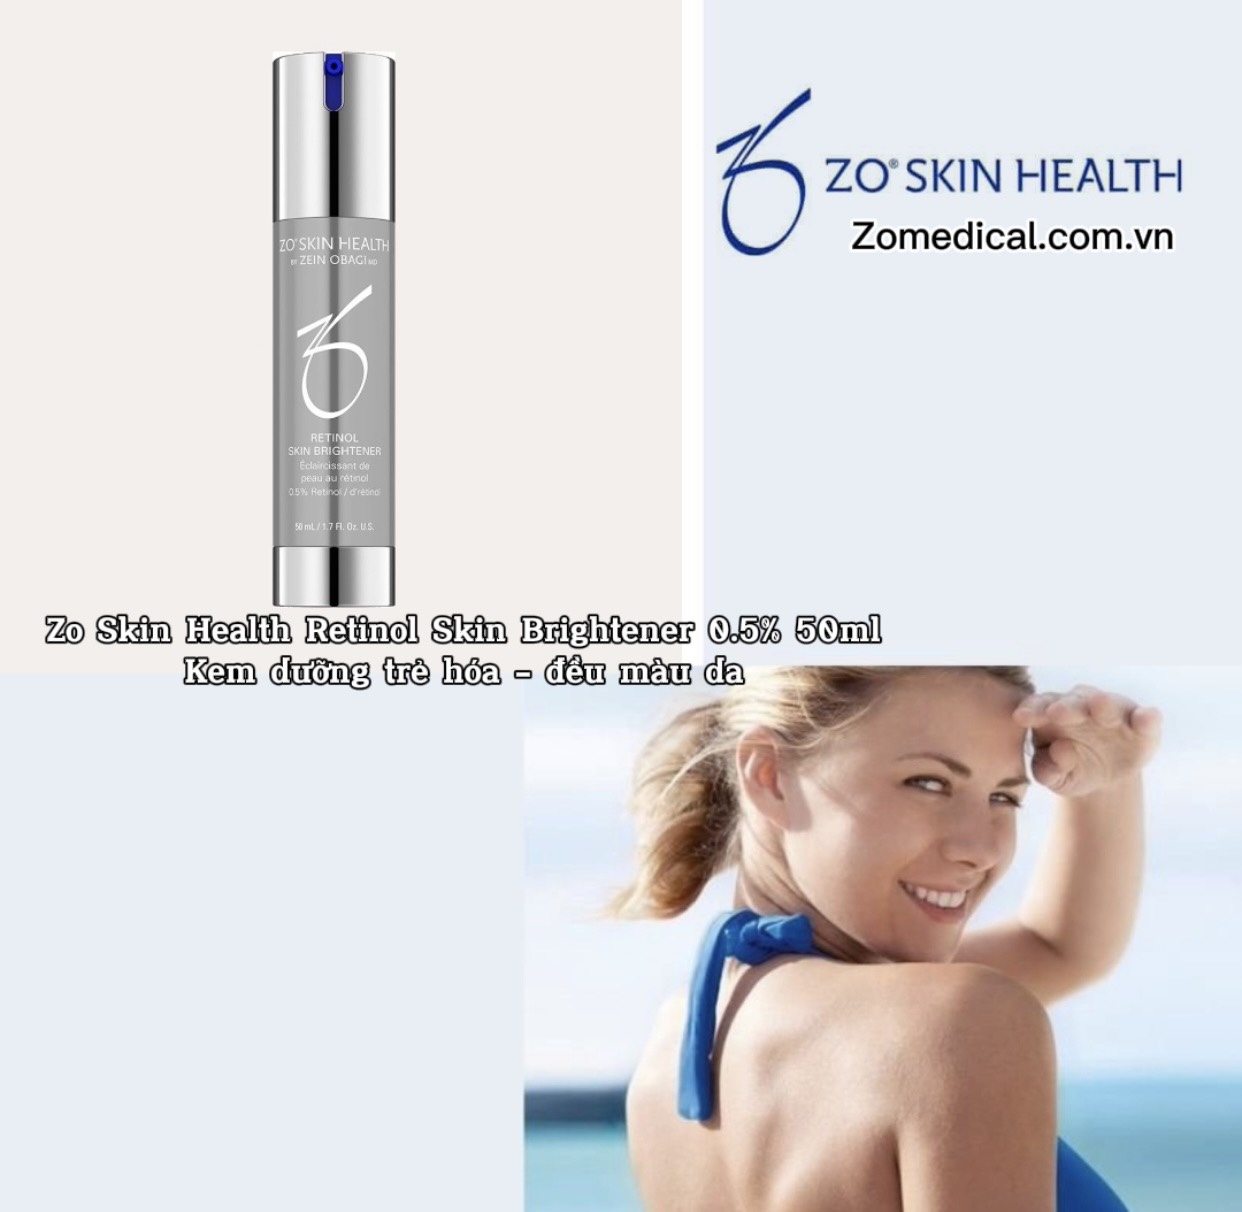 Kem dưỡng trẻ hóa sáng da Zo Skin Health Retinol Skin Brightener 0.5% 50ml